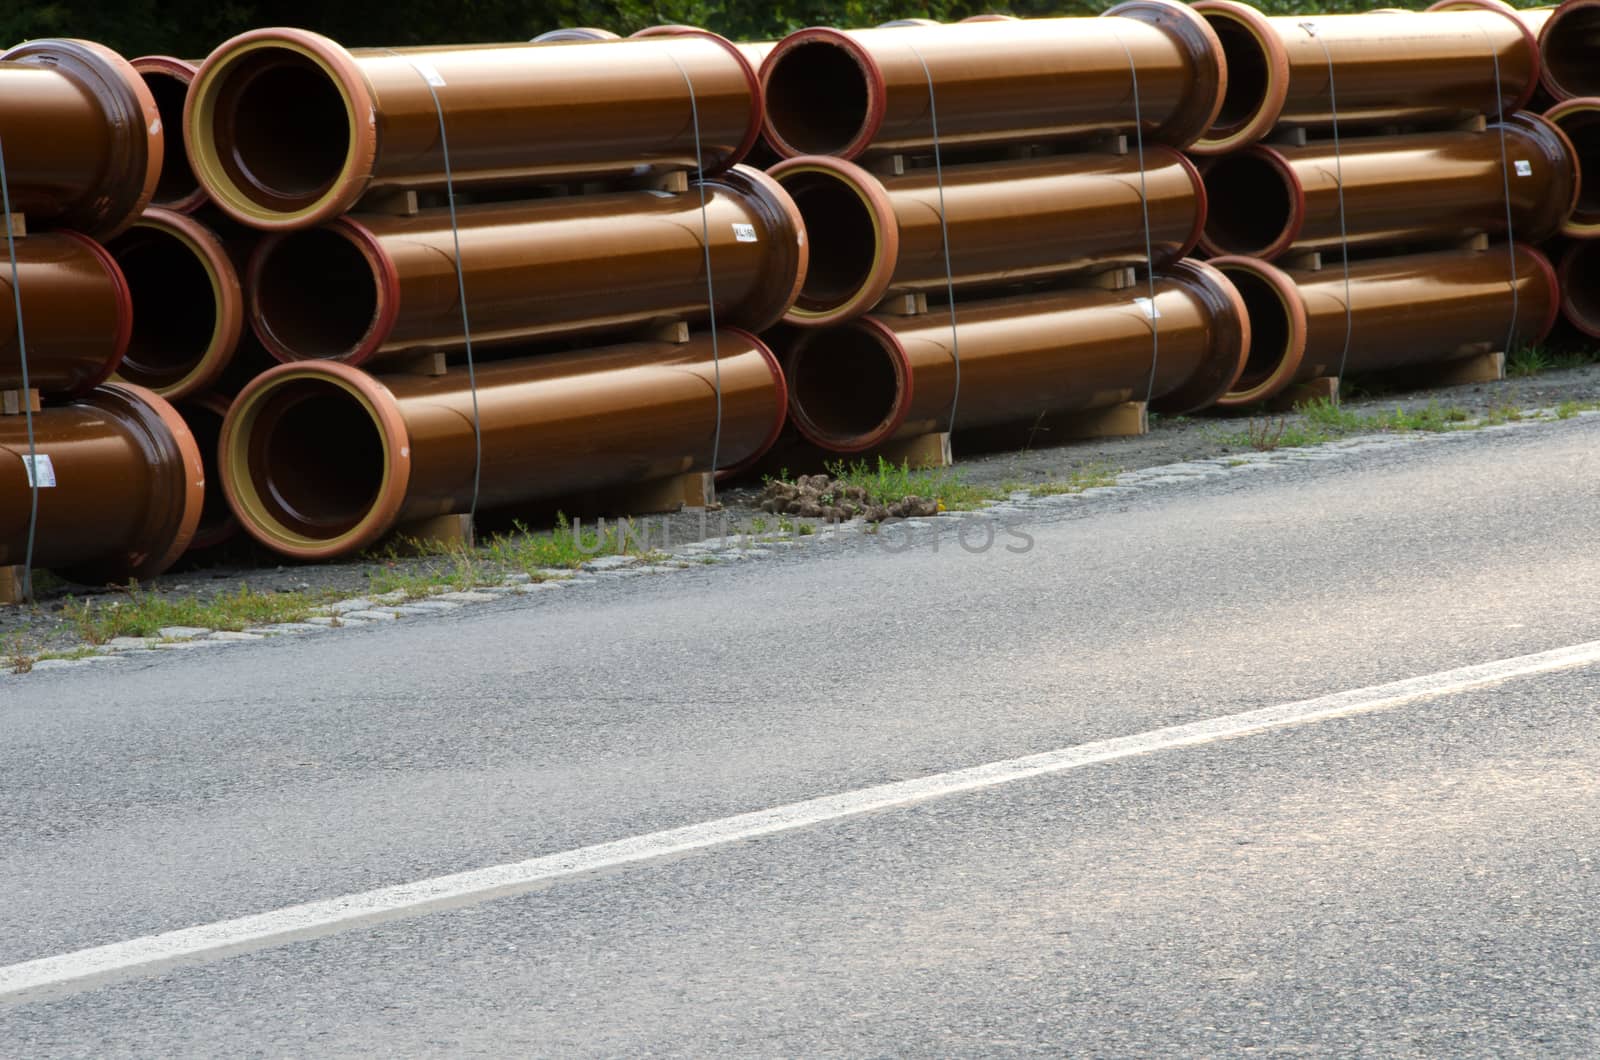 Stacks of pipes next to asphalt road. 